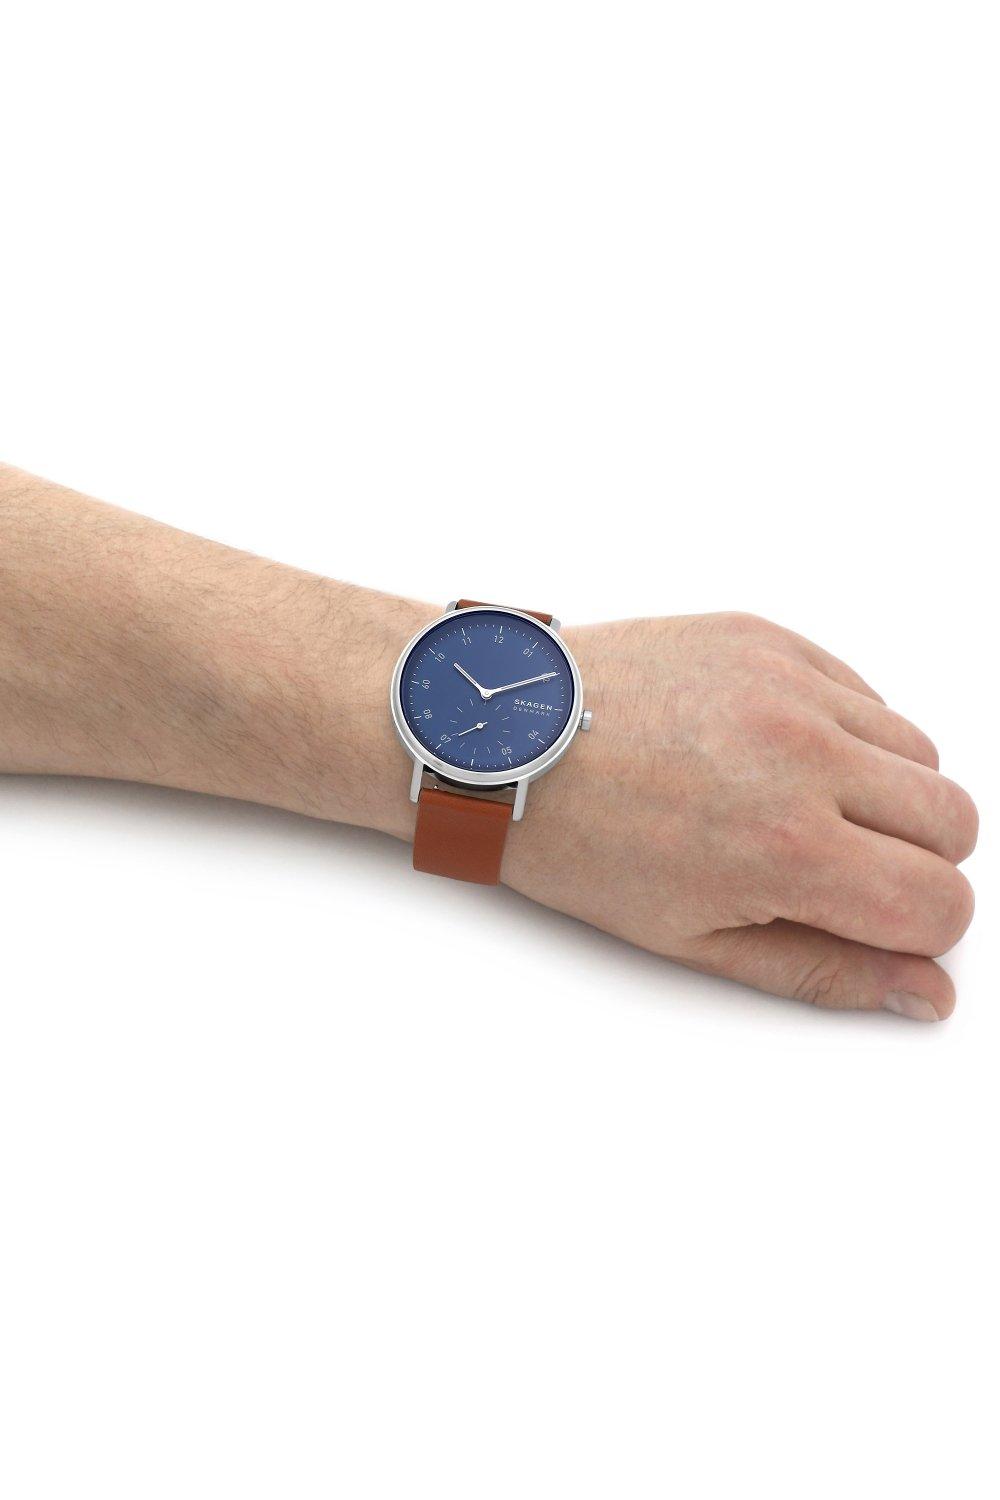 Watches | Kuppel Stainless Steel Watch Classic - | Skw6888 Skagen Analogue Quartz